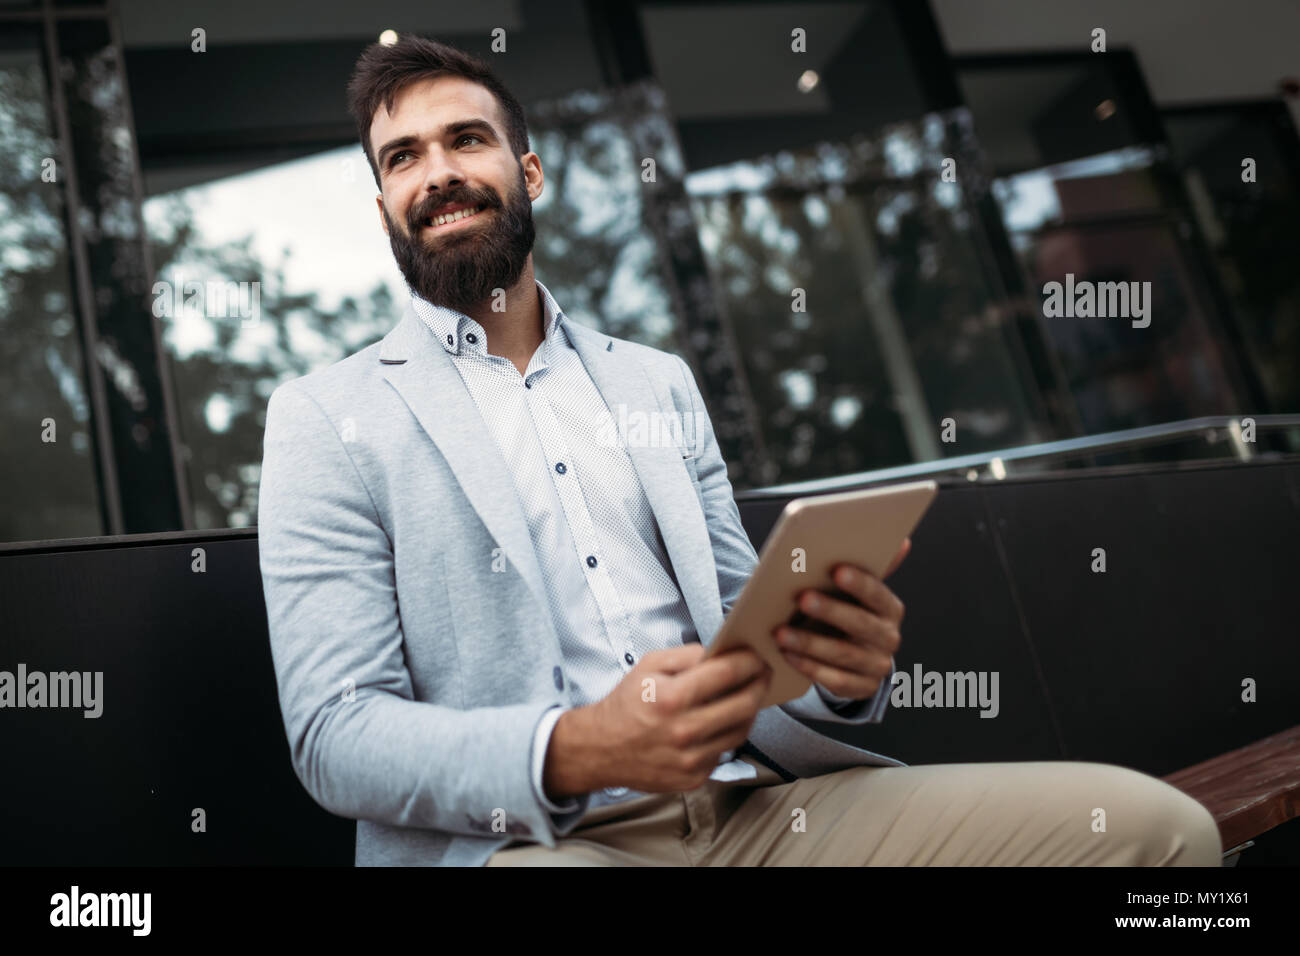 Shot of businessman sitting on bench with digital tablet Banque D'Images